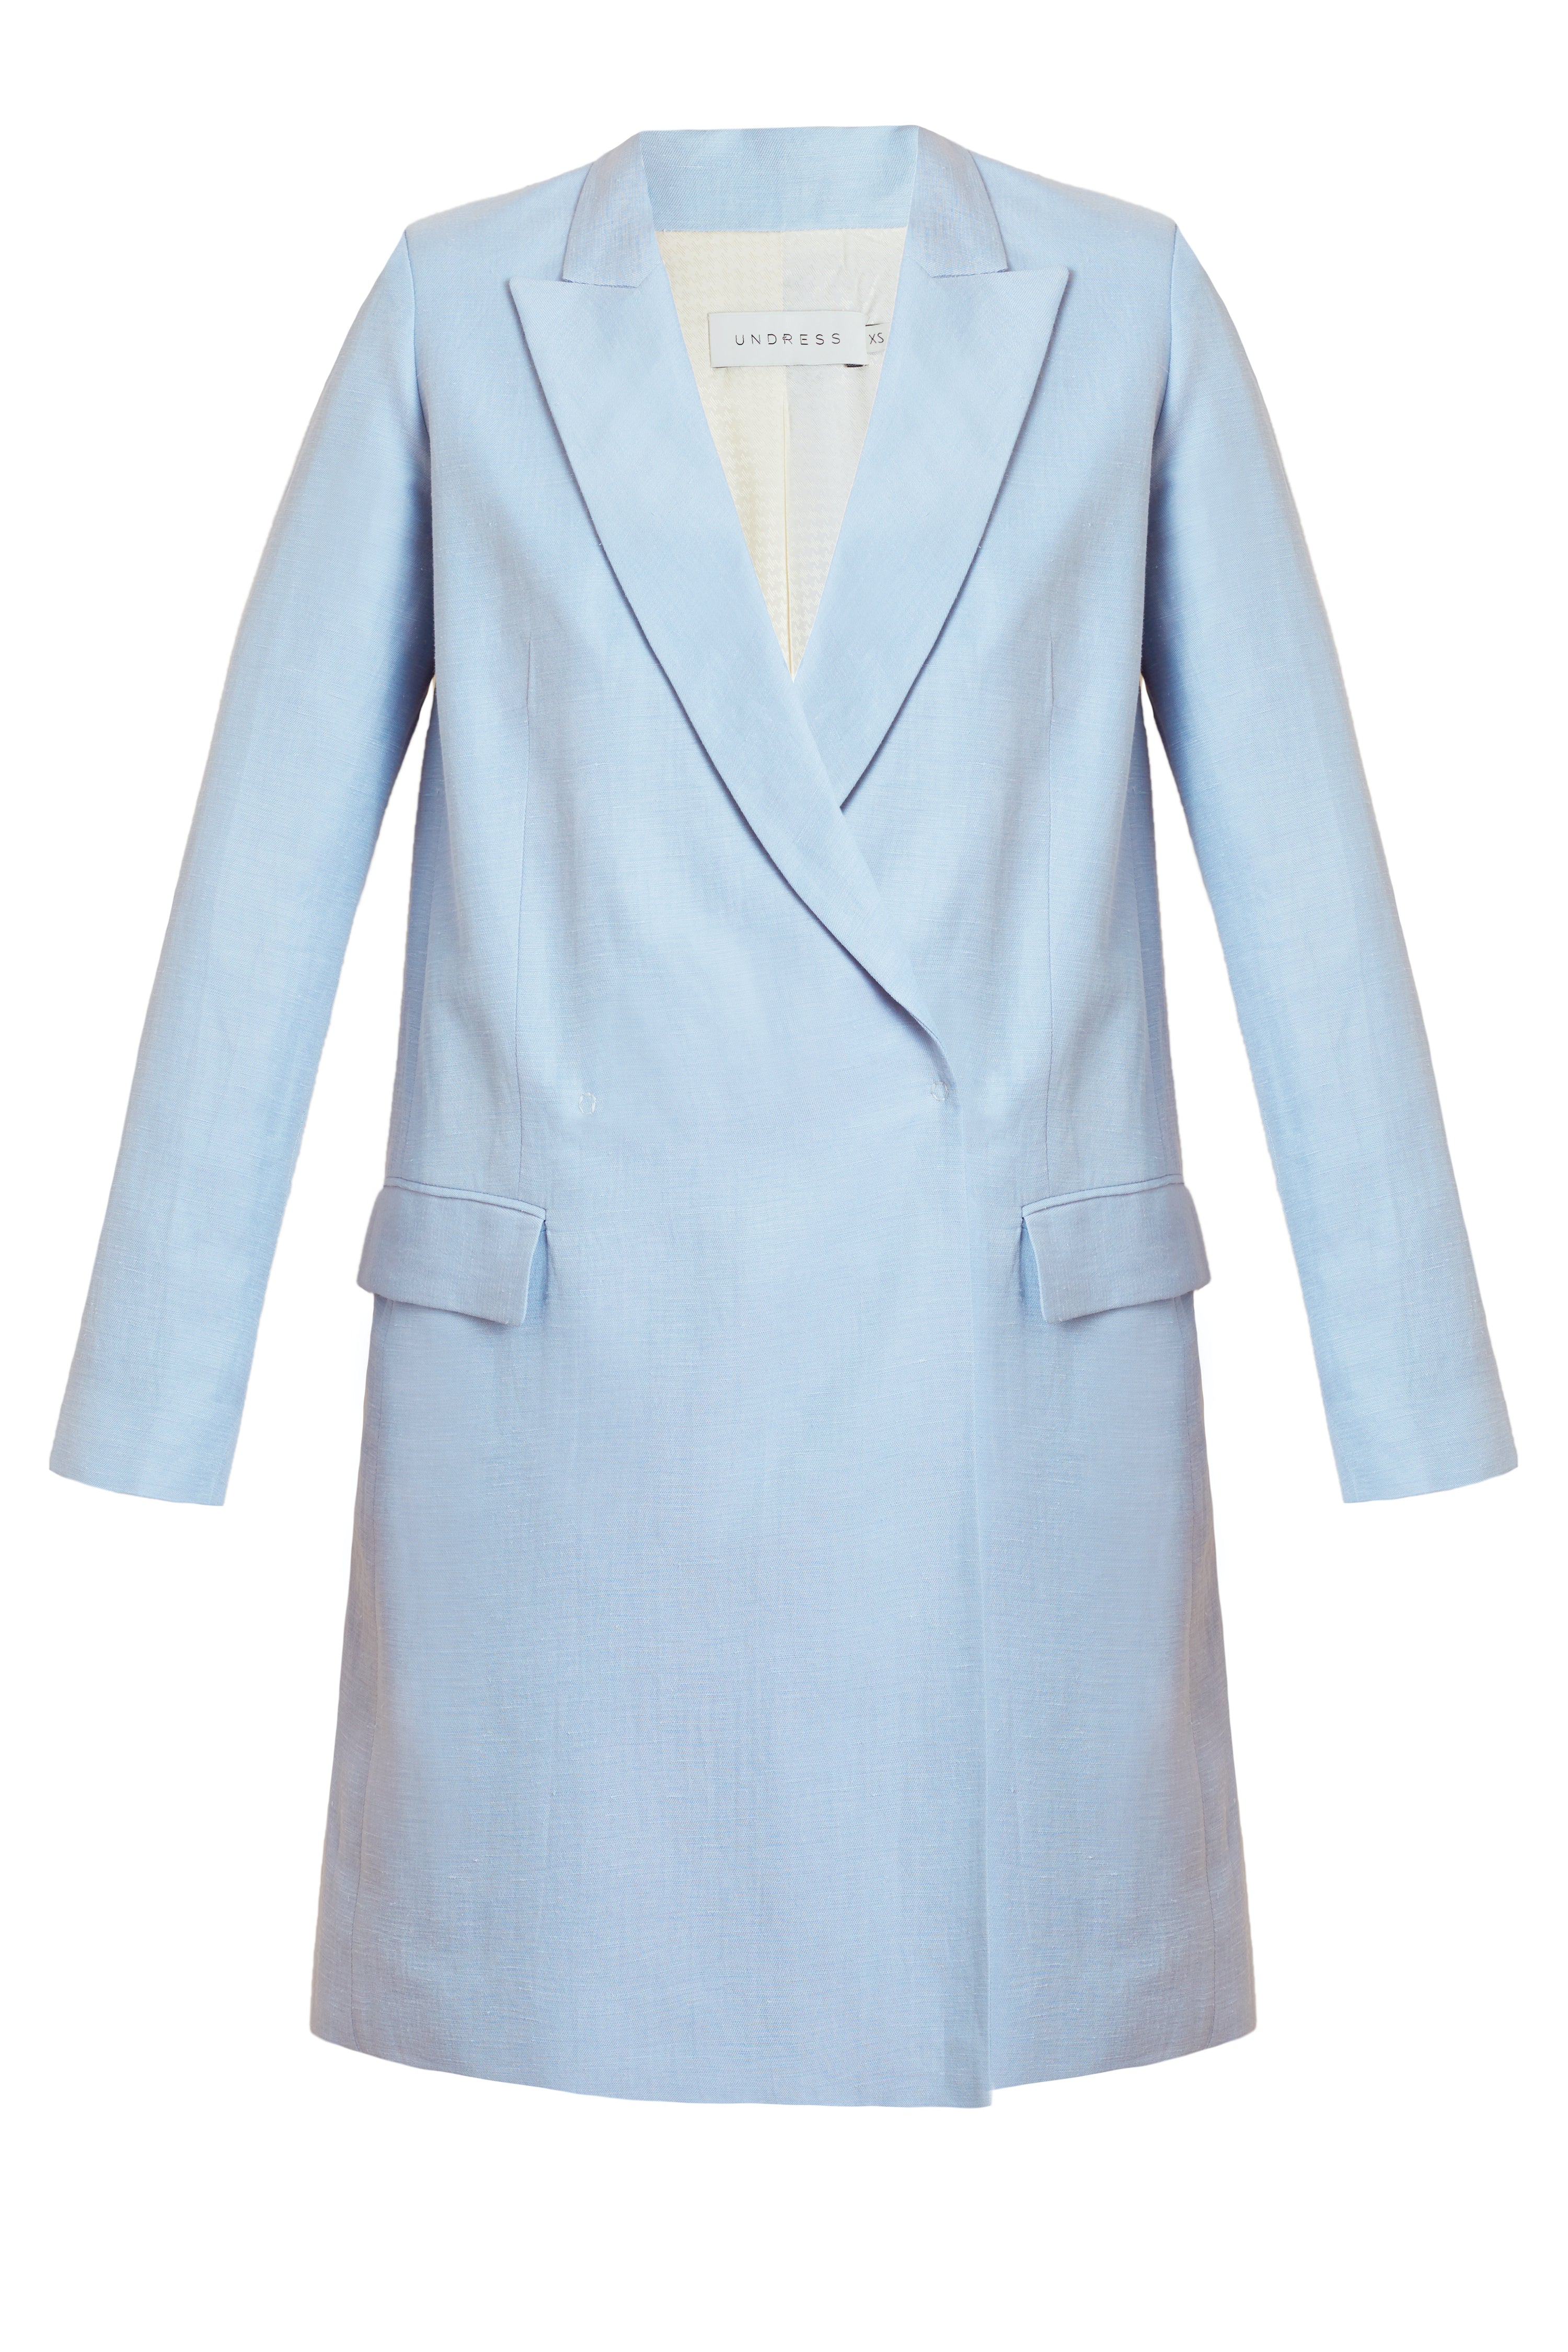 NAMYA light blue mini blazer dress